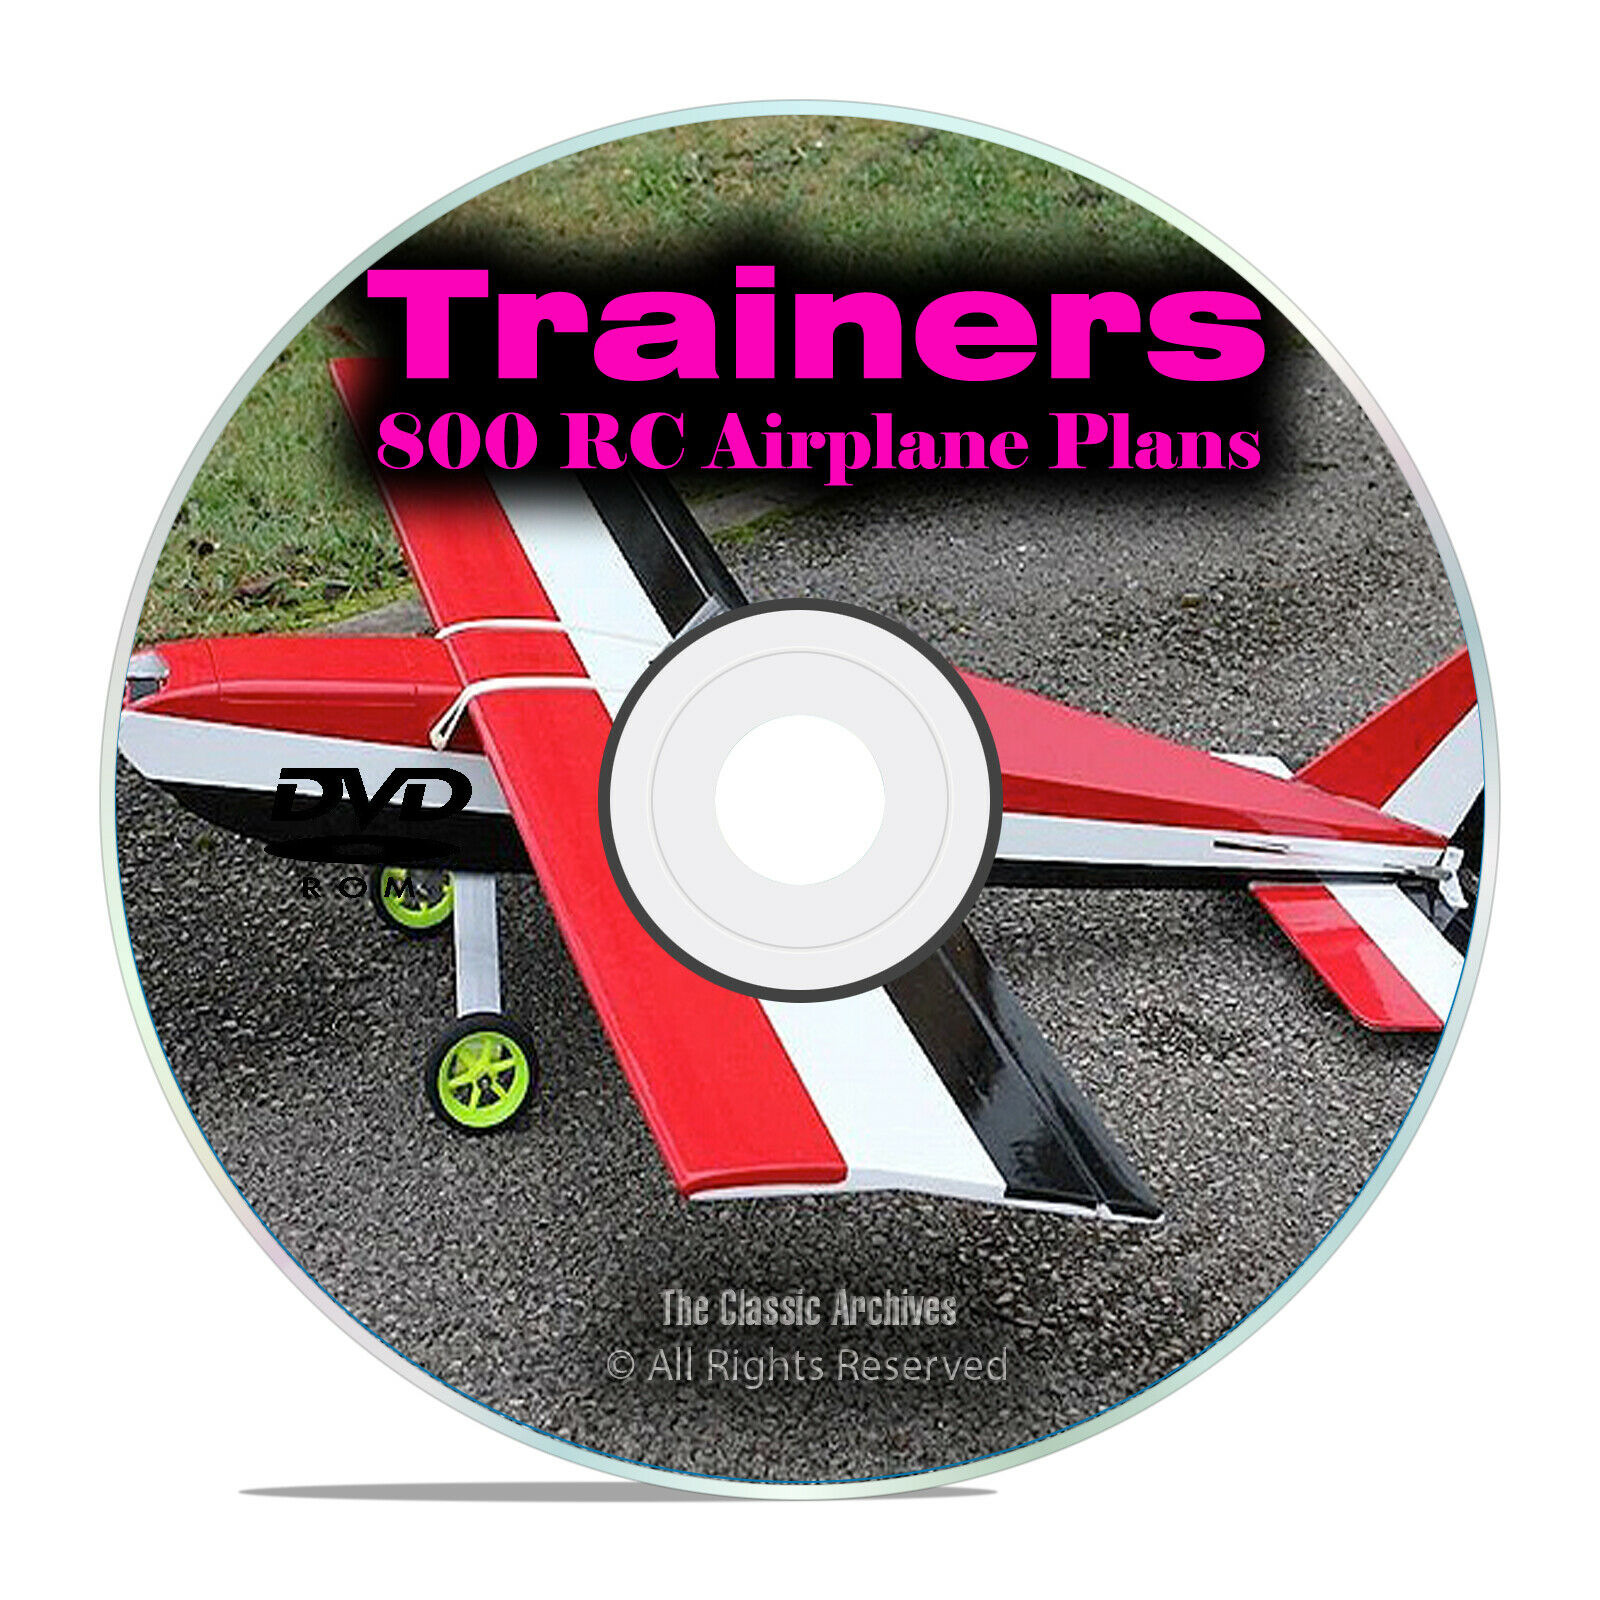 800 Trainer Rc Remote Control Model Airplane Plans, Training Planes Dvd I19